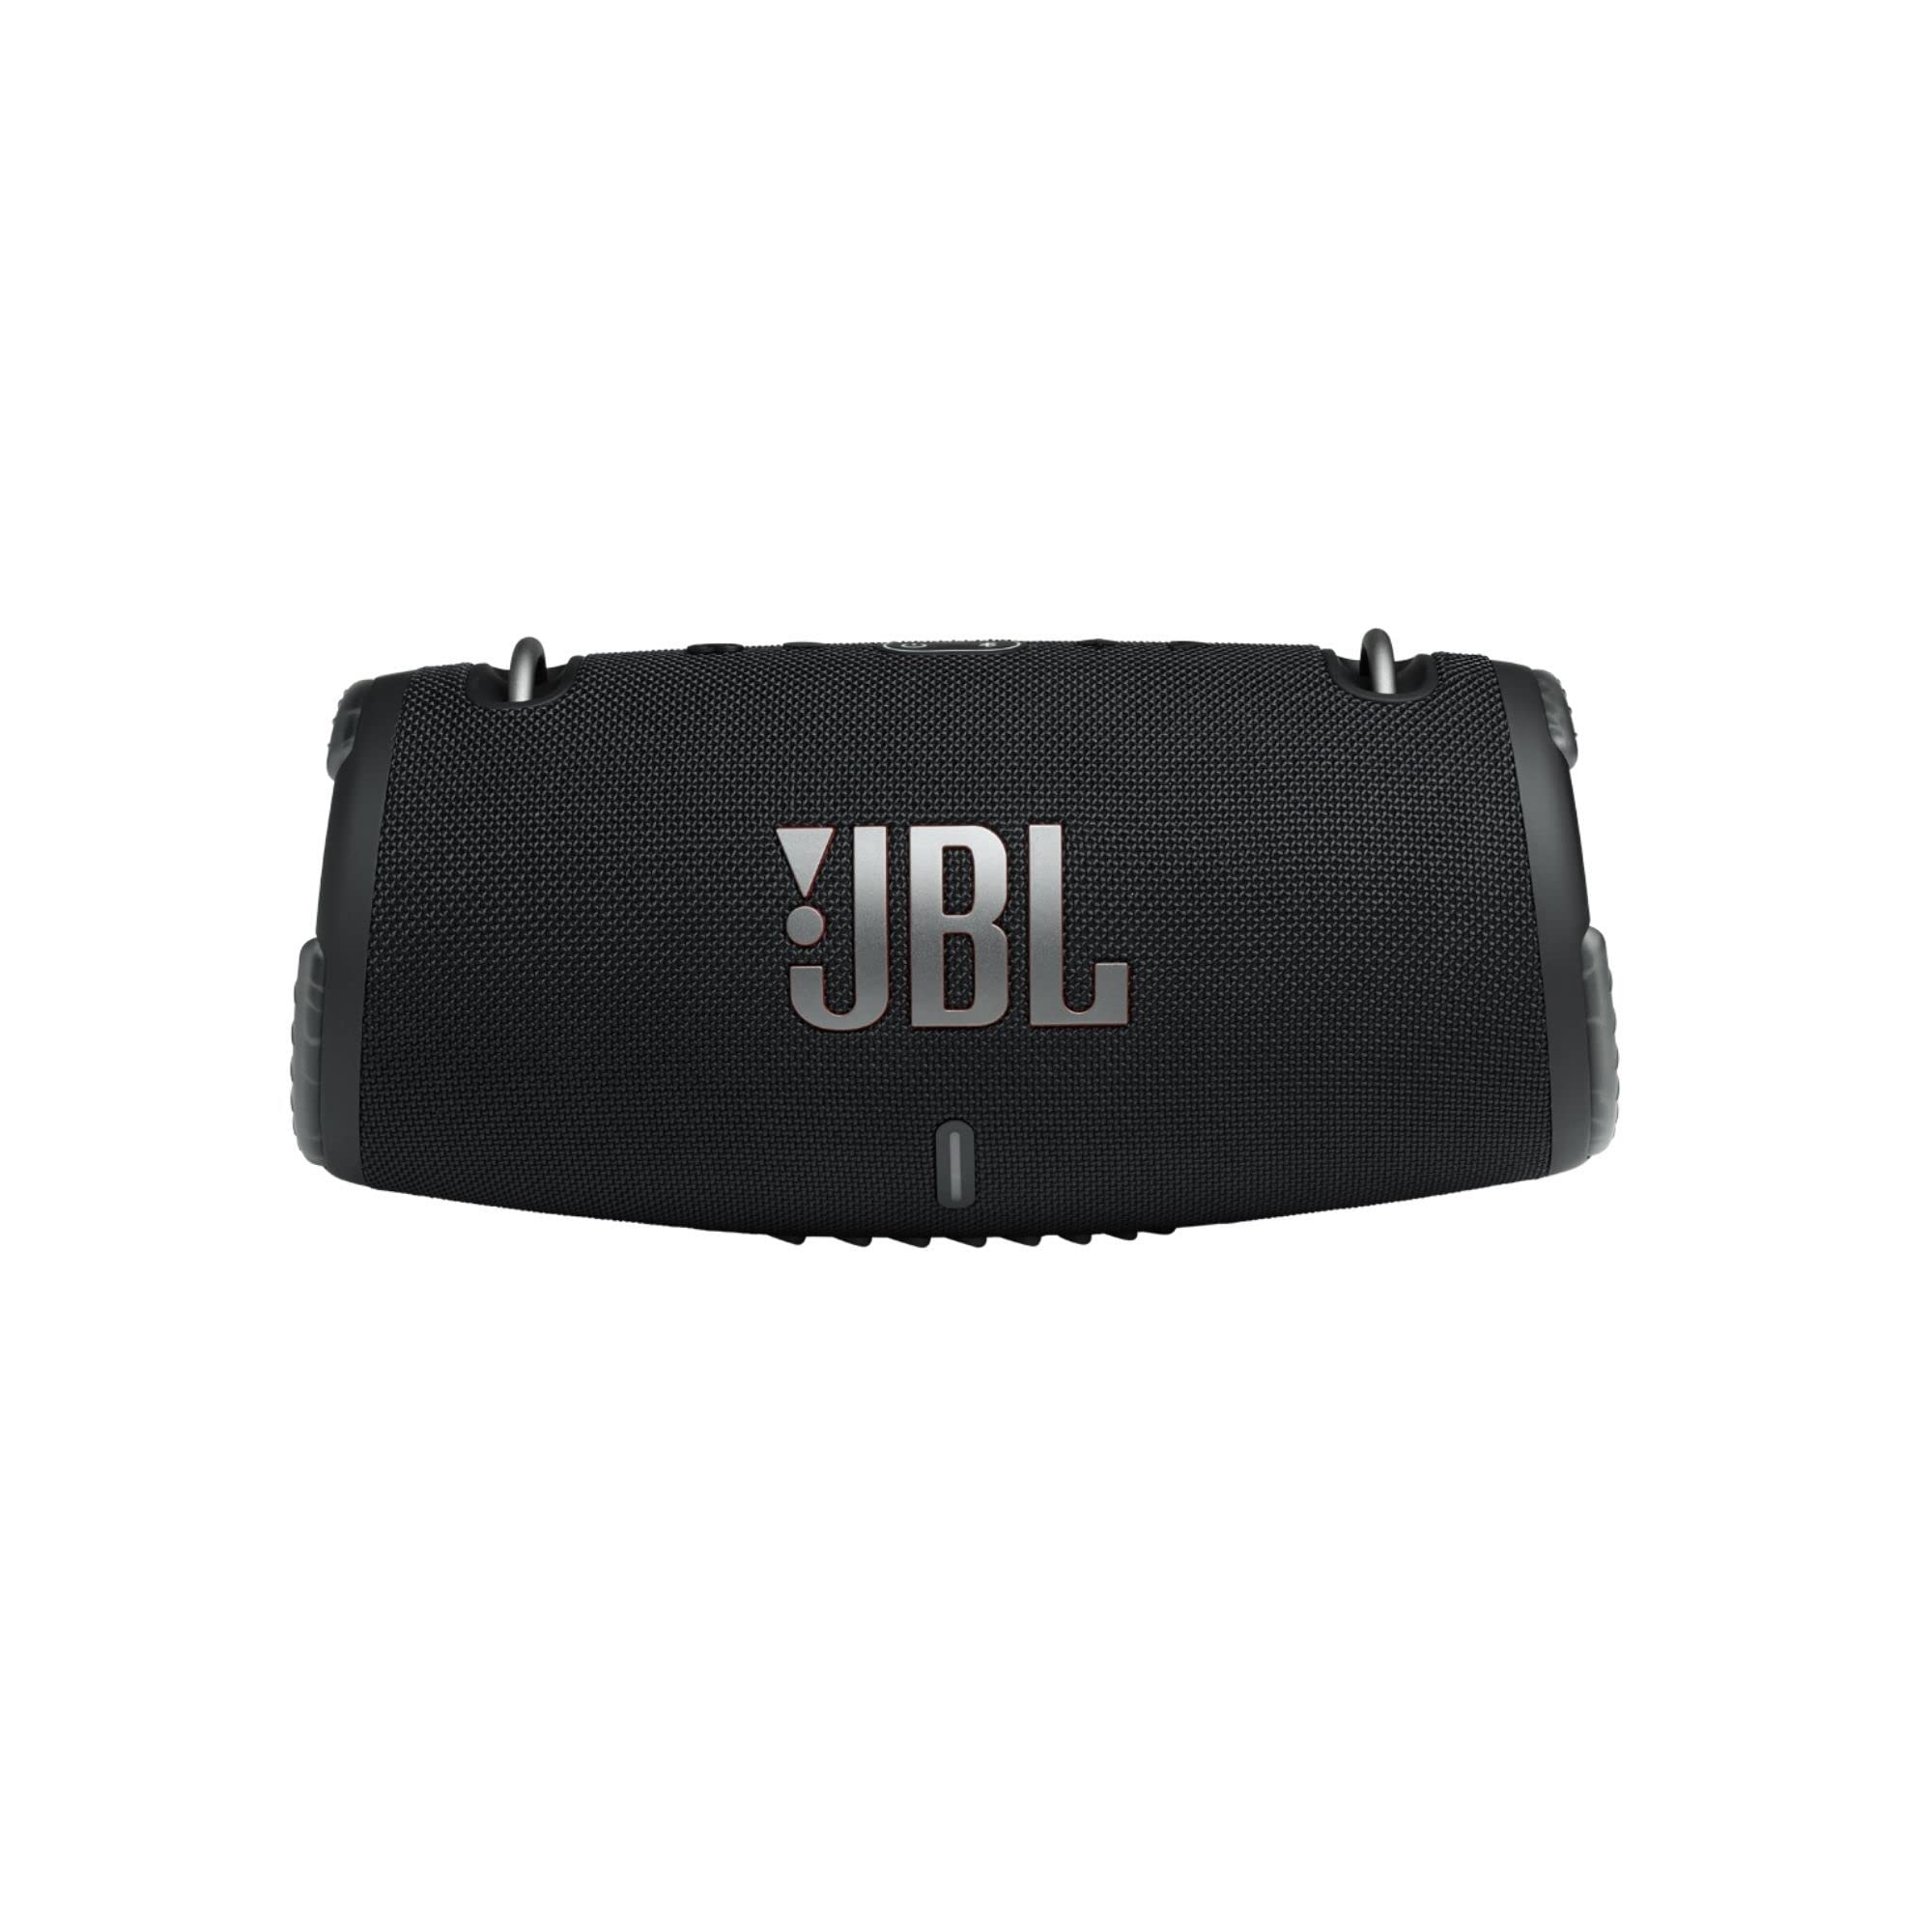 JBL Xtreme 3 - Alto-falante Bluetooth portátil com IP67 à prova d'água